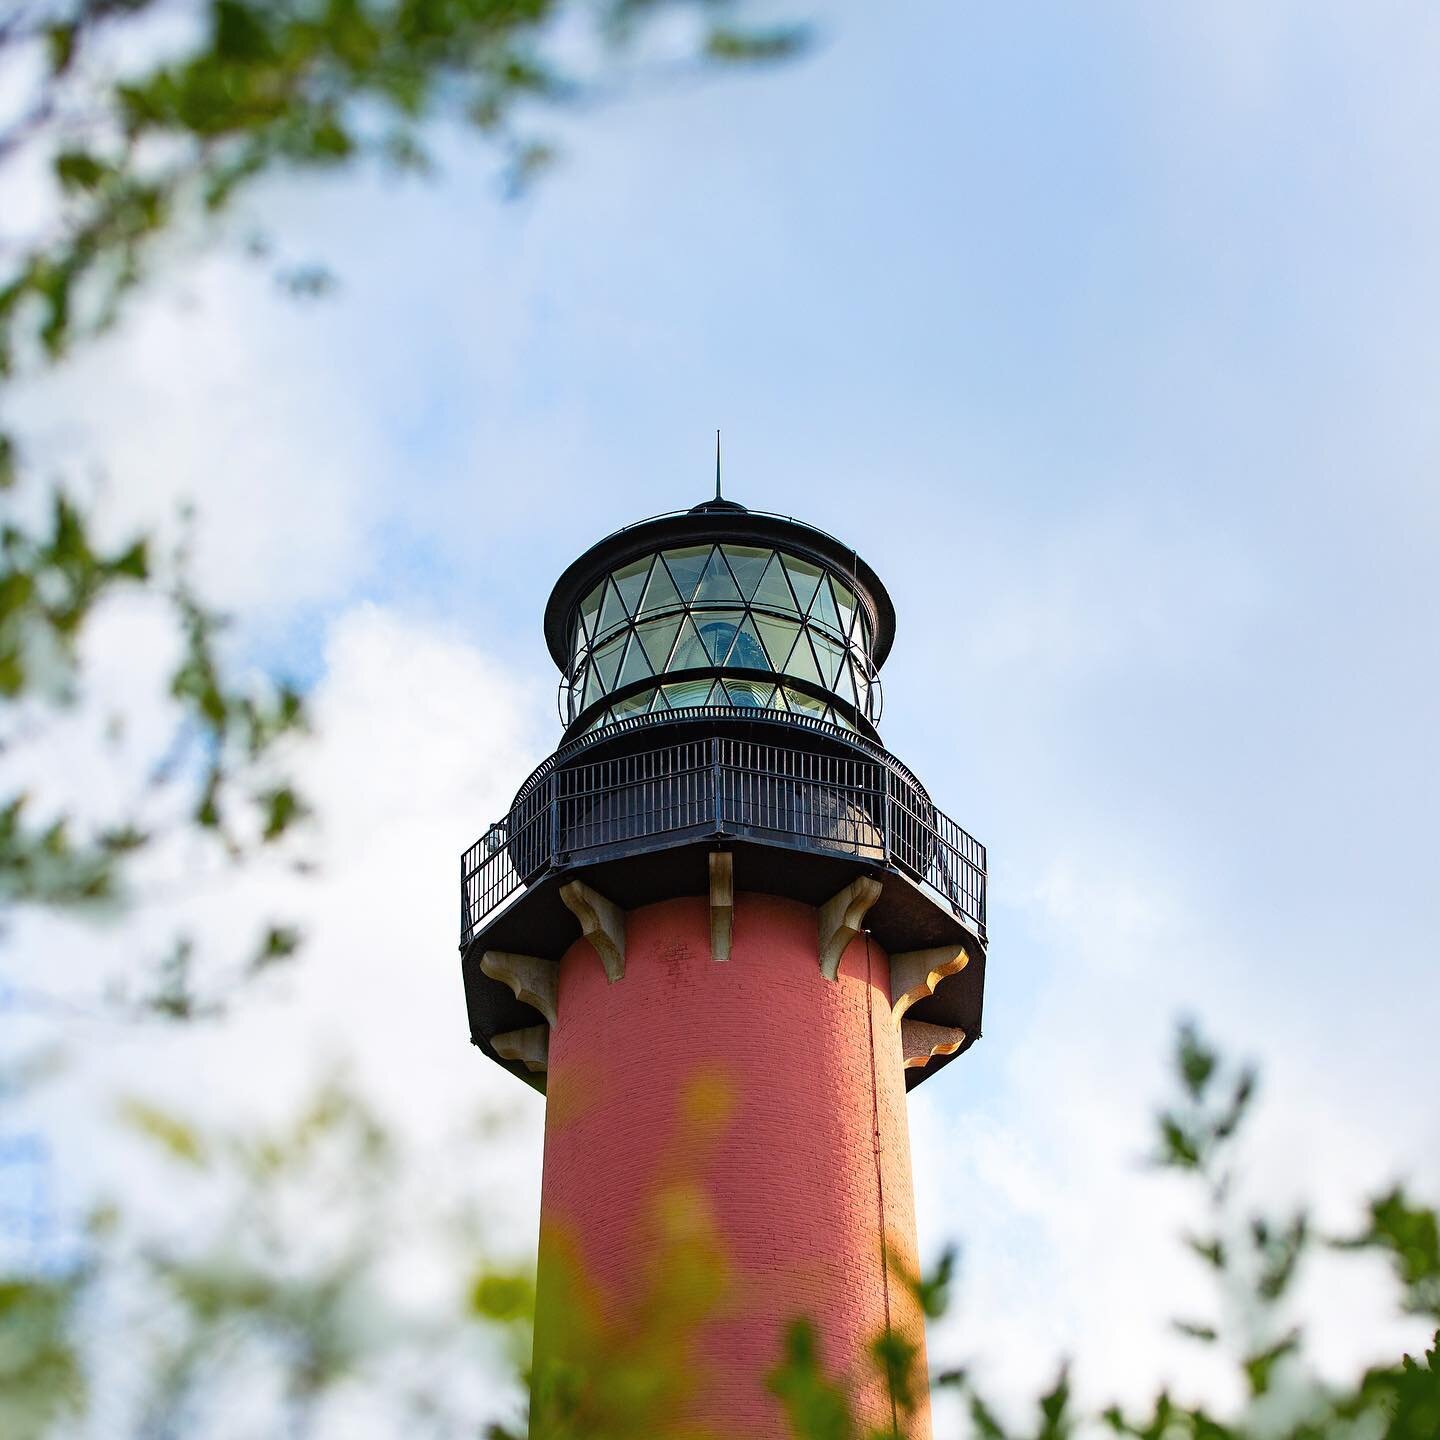 Standing tall since 1860 🌟@jupiter_lighthouse

#jupiterinletlighthouse #discoverjupiterfl #jupiterlighthouse #lighthouse #jupiterfl #townofjupiter #palmbeach #florida #jupscoop #injupiter #exploreflorida #explorida #floridascenes #iloveflorida